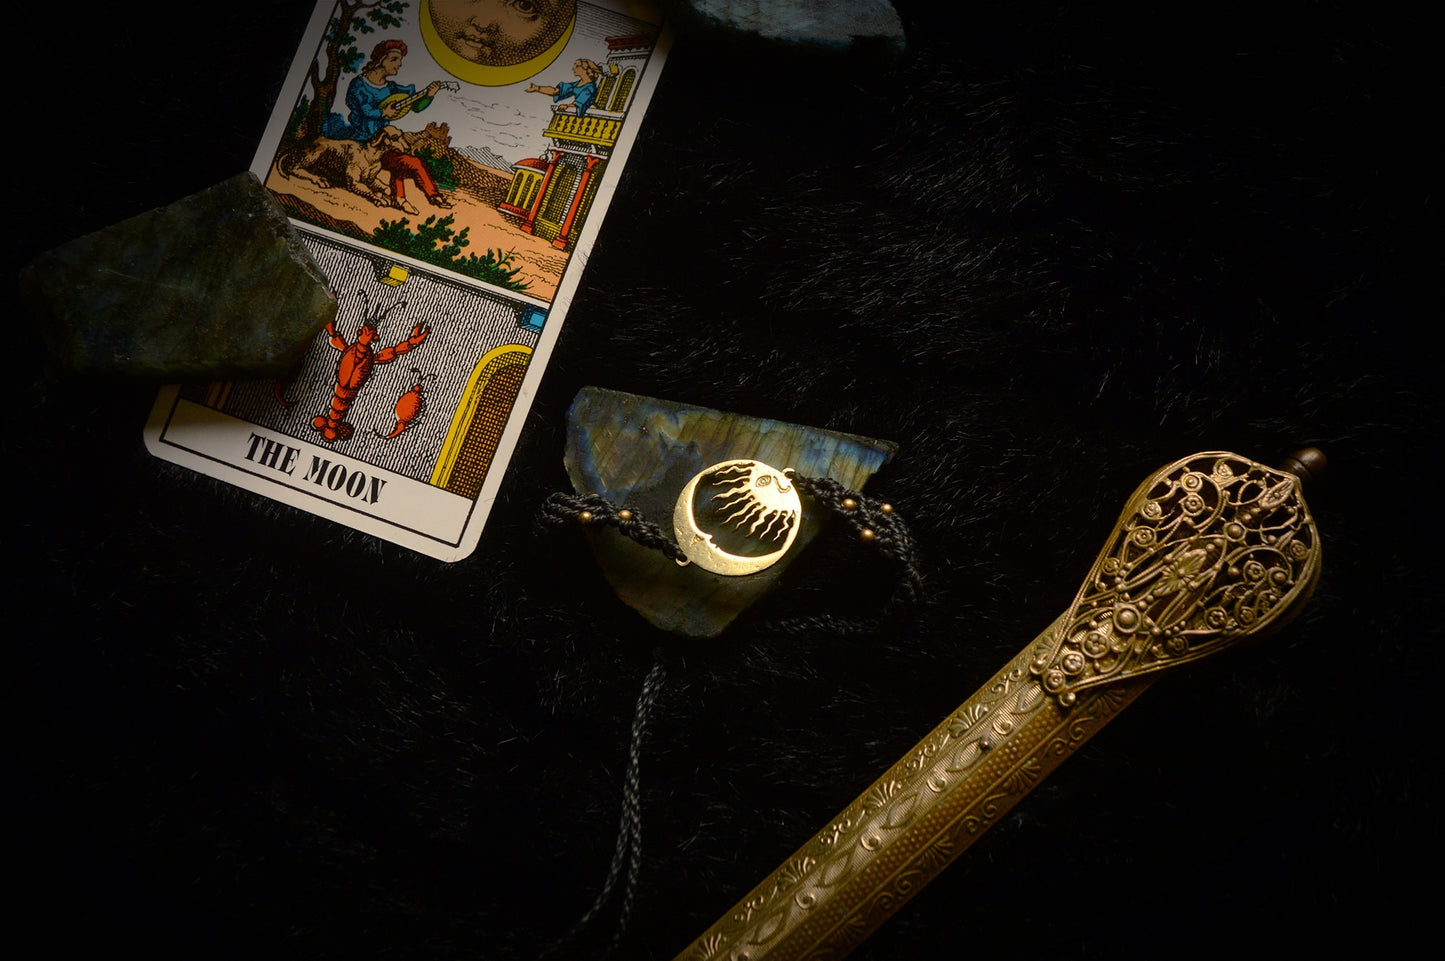 Lunar cycle and sunburst macrame bracelet. Dainty witchy celestial jewellery. Tarot inspired